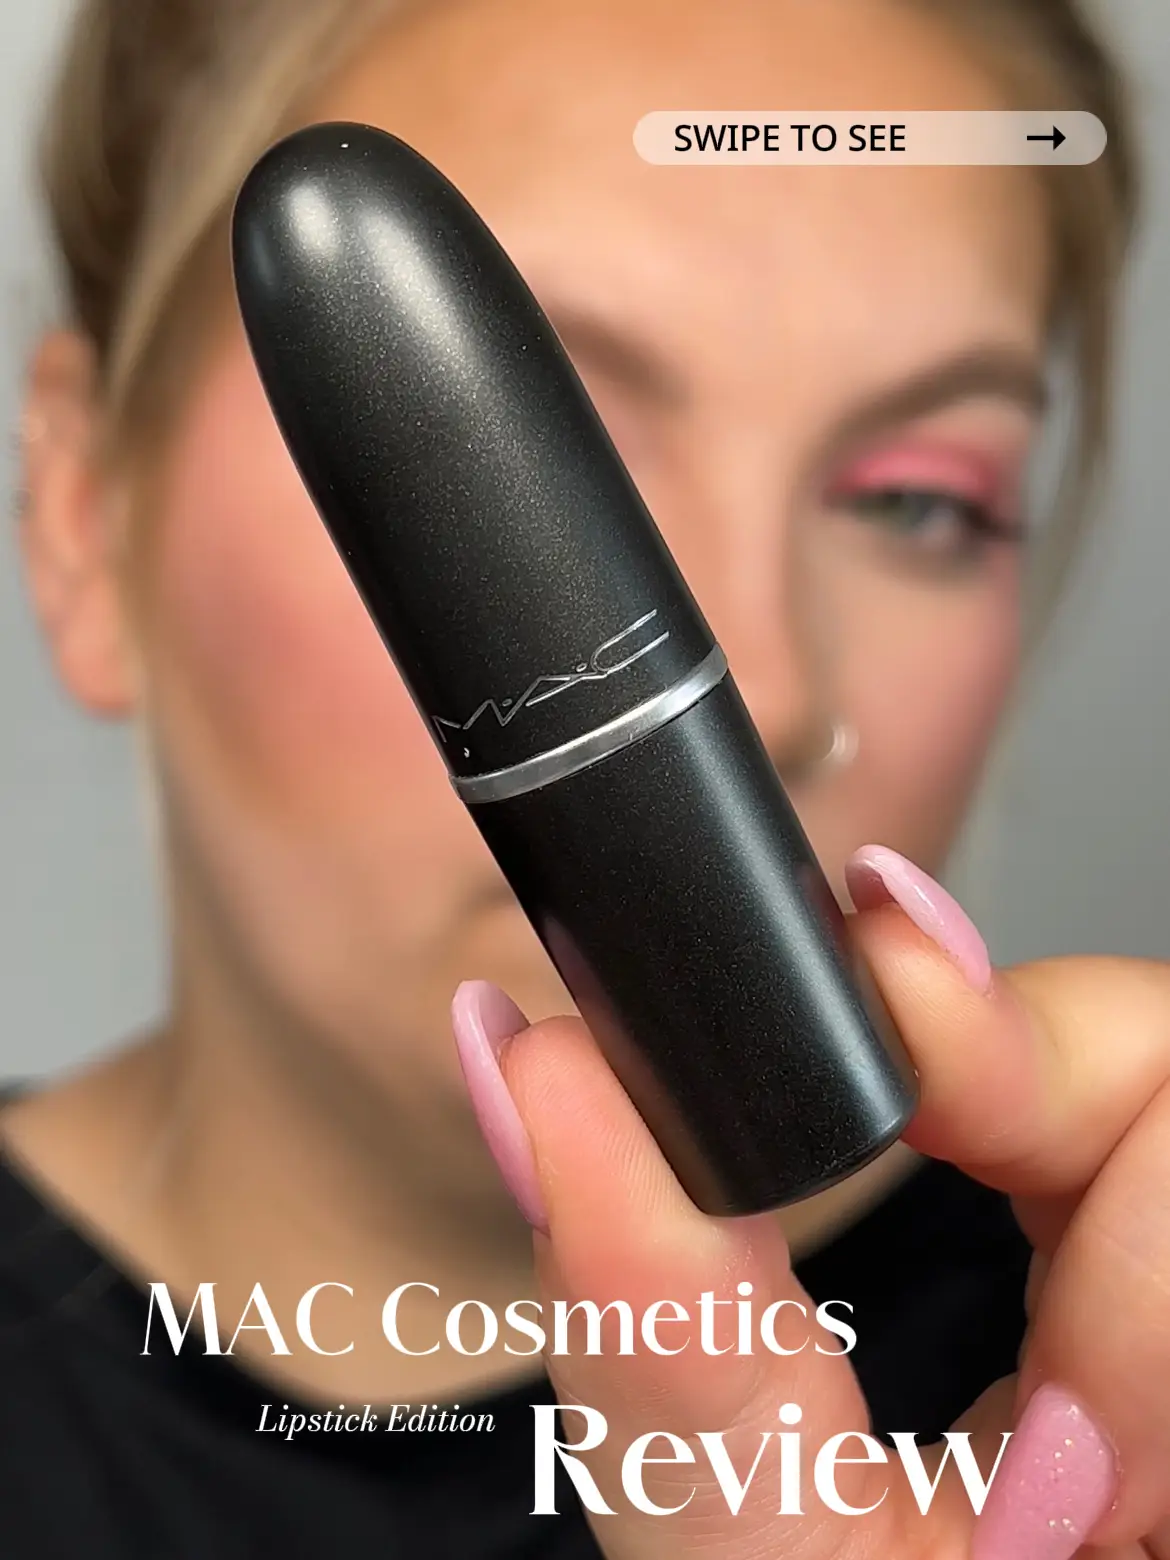 Mac Cosmetics Review Lipstick Edition